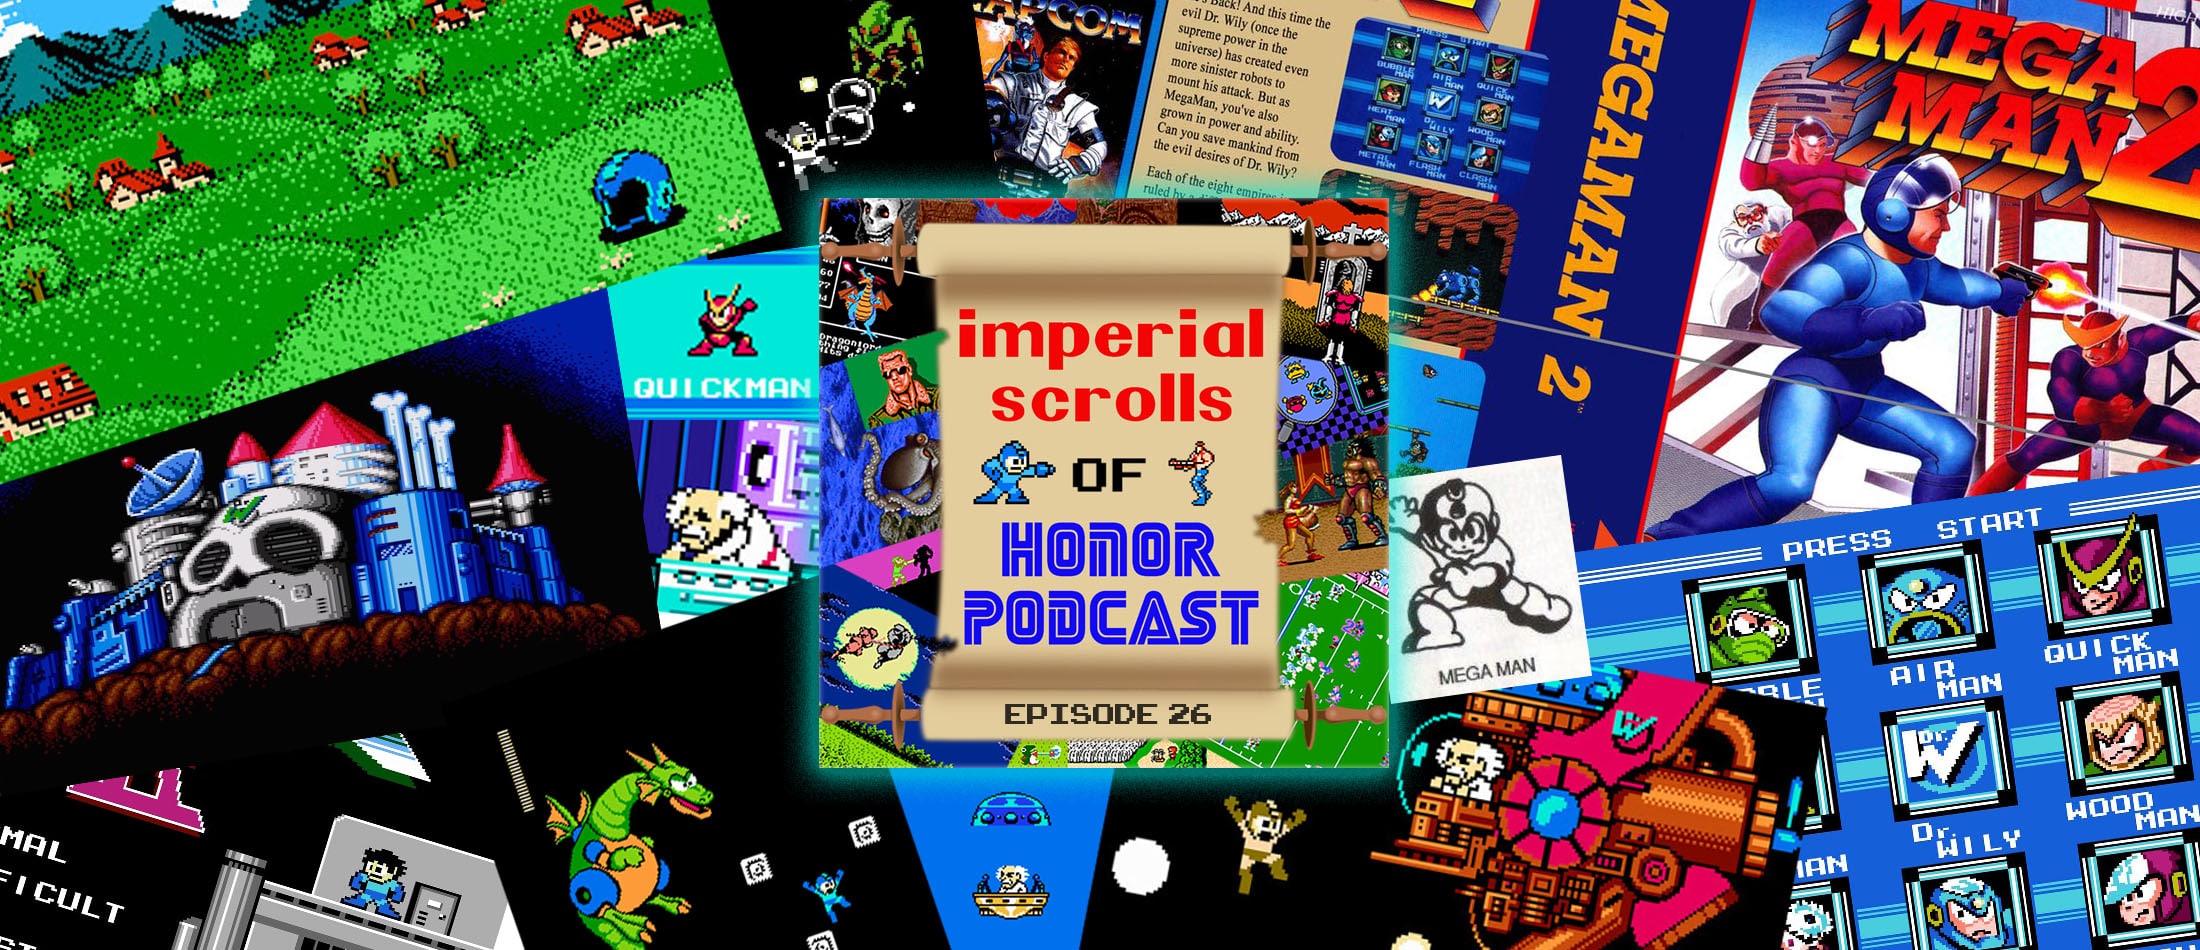 Imperial Scrolls of Honor Podcast - Episode 26 - Mega Man 2 (NES)